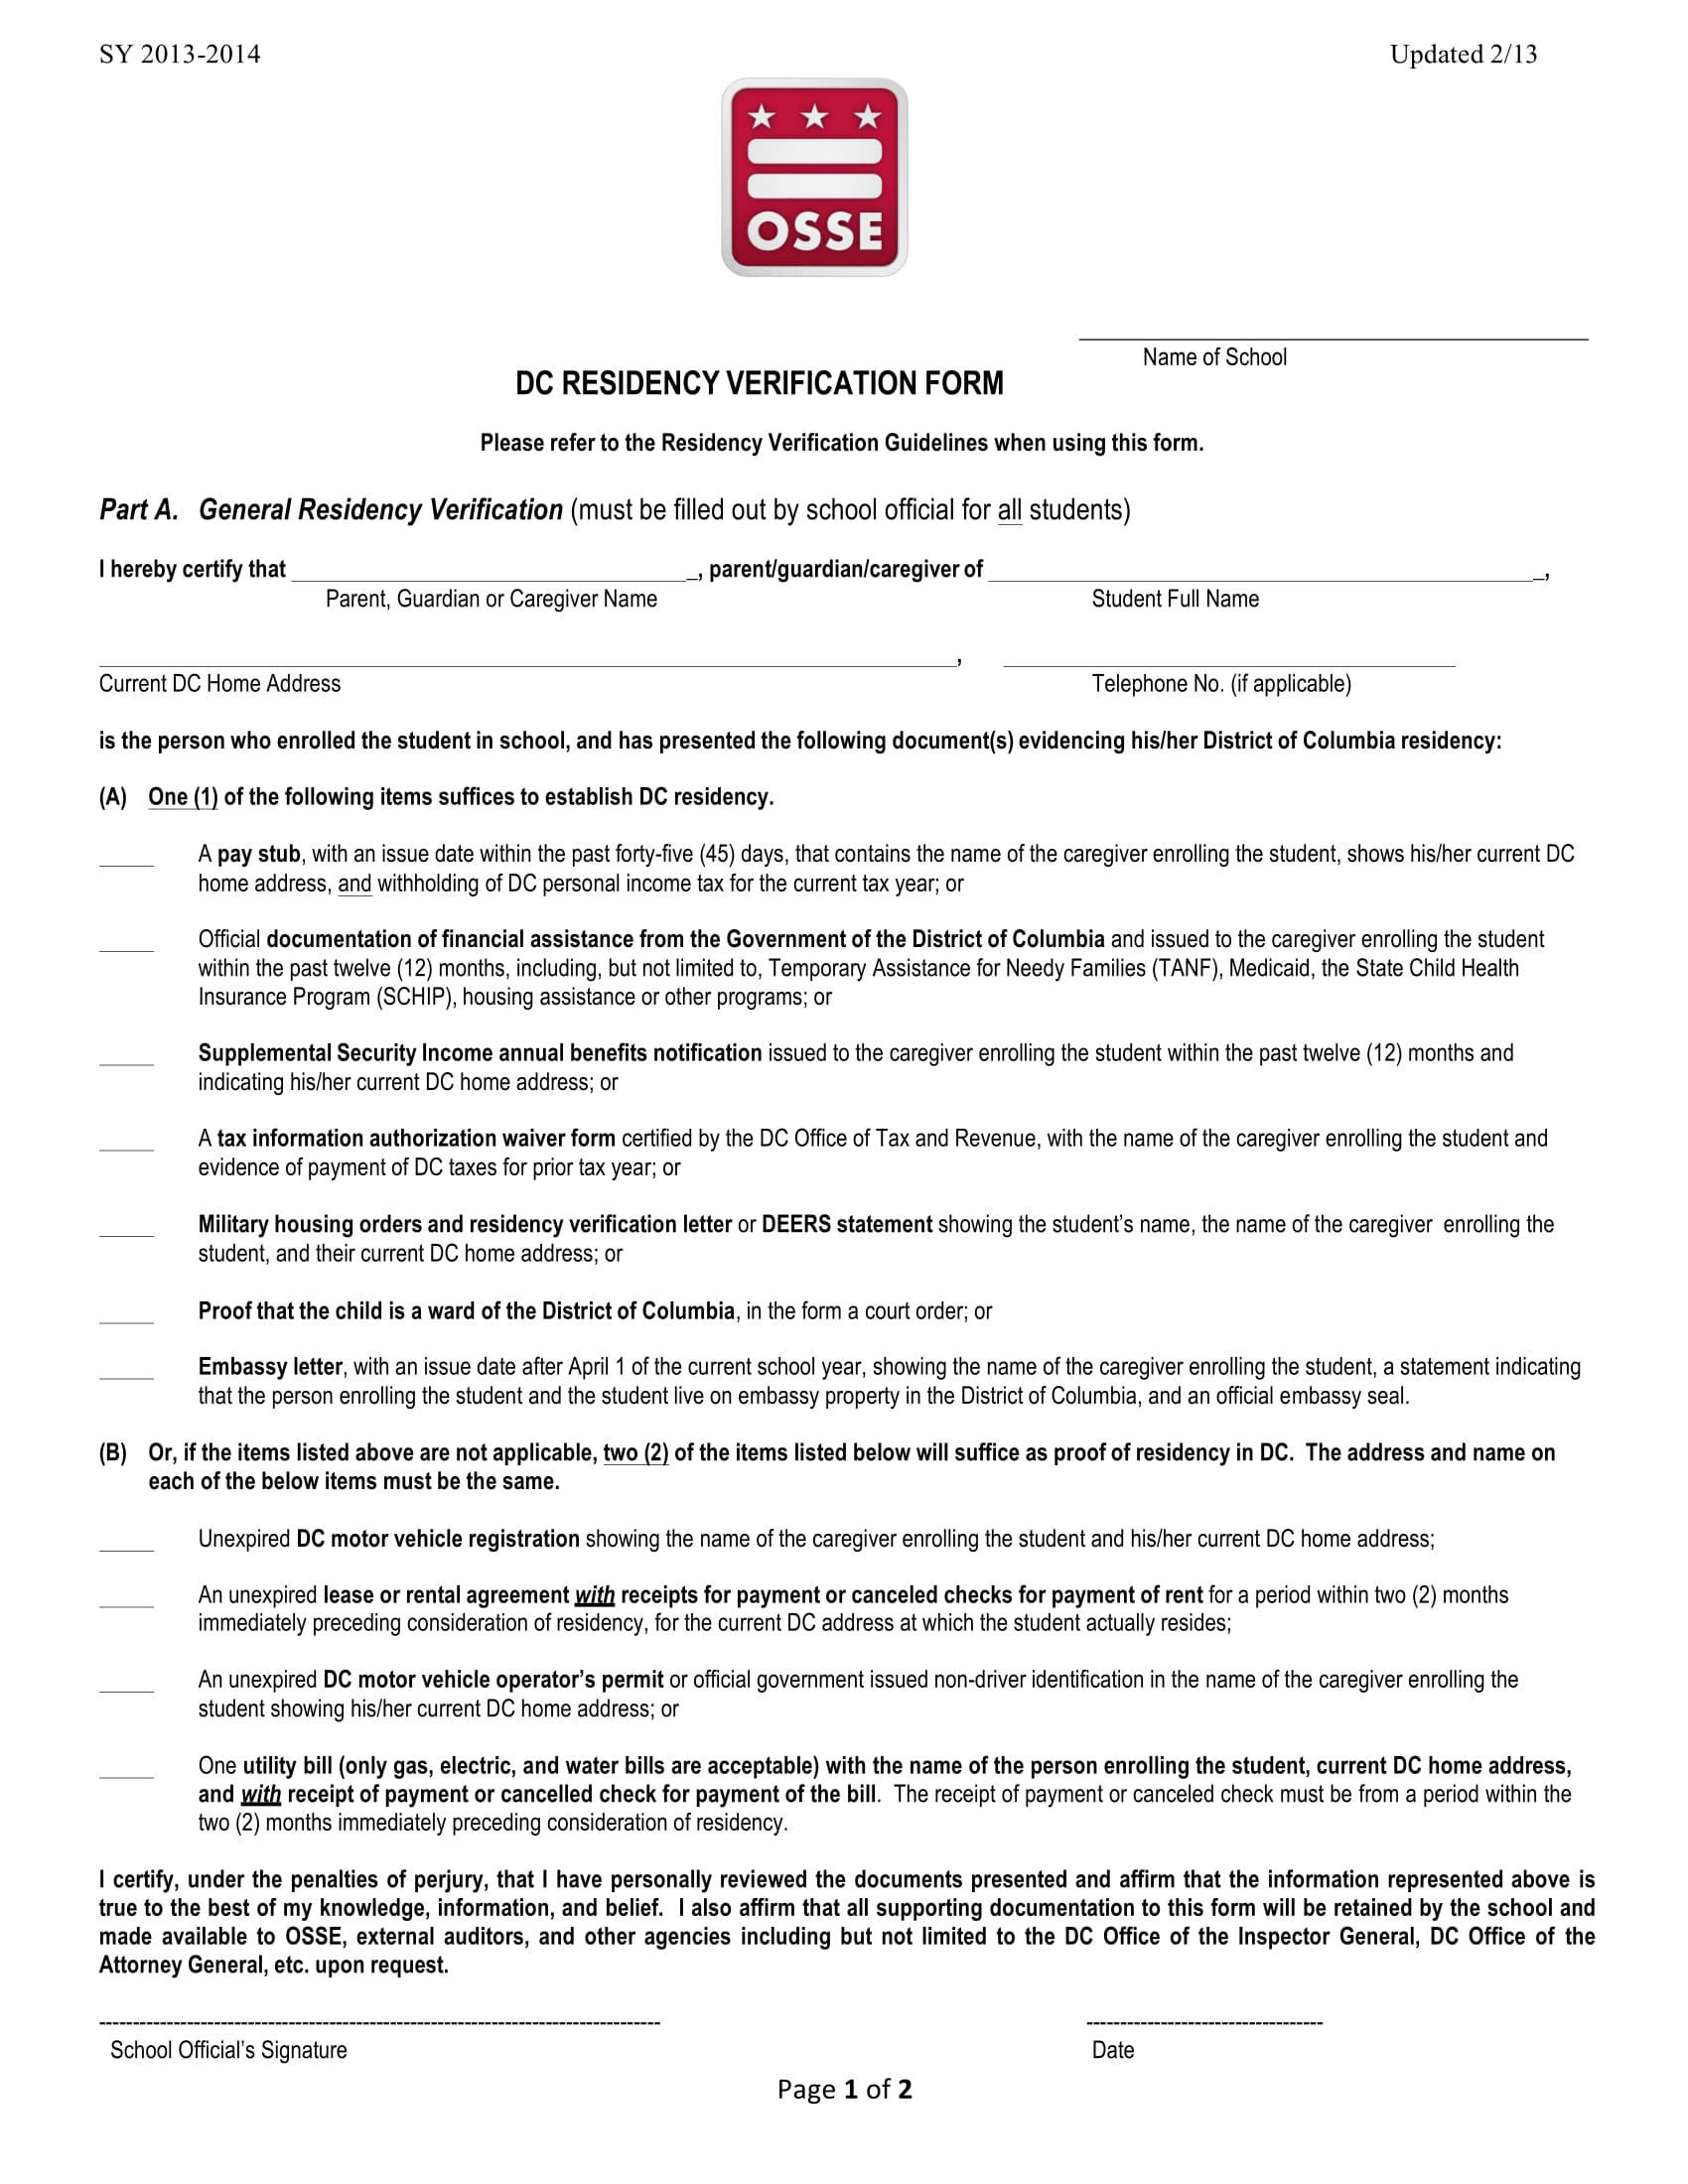 dc residency verification form 1